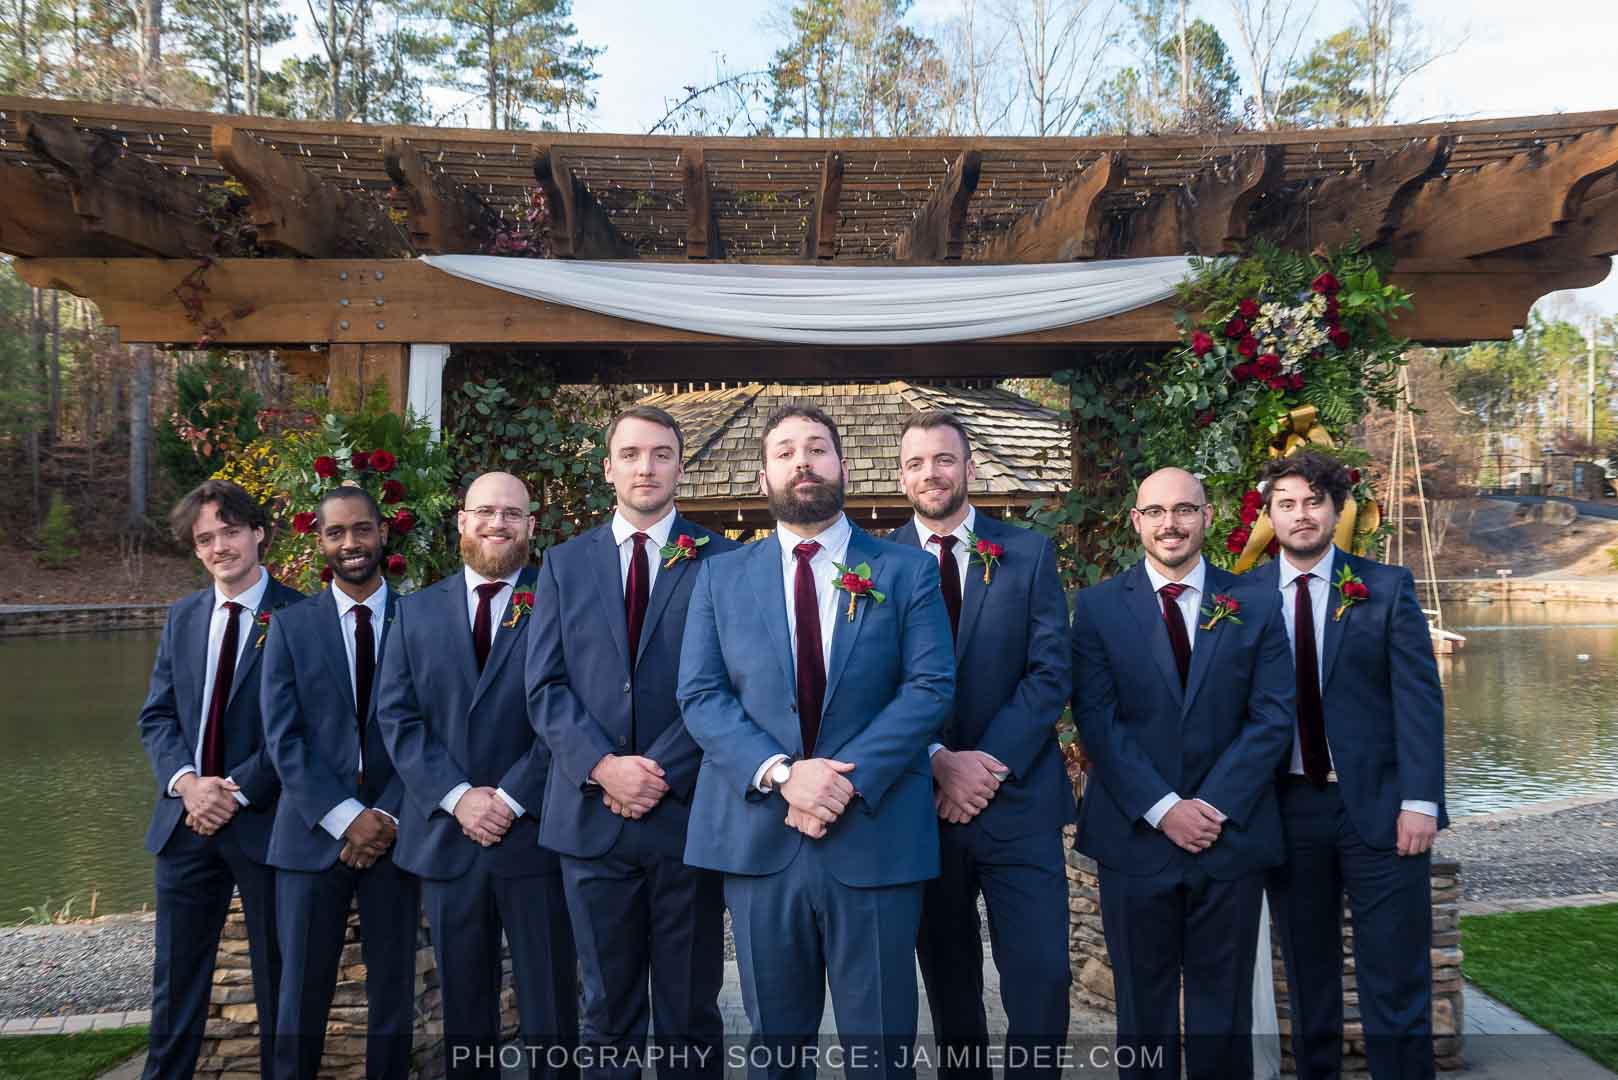 Rocky's Lake Estate Wedding Venue - bridal party portrait with groomsmen